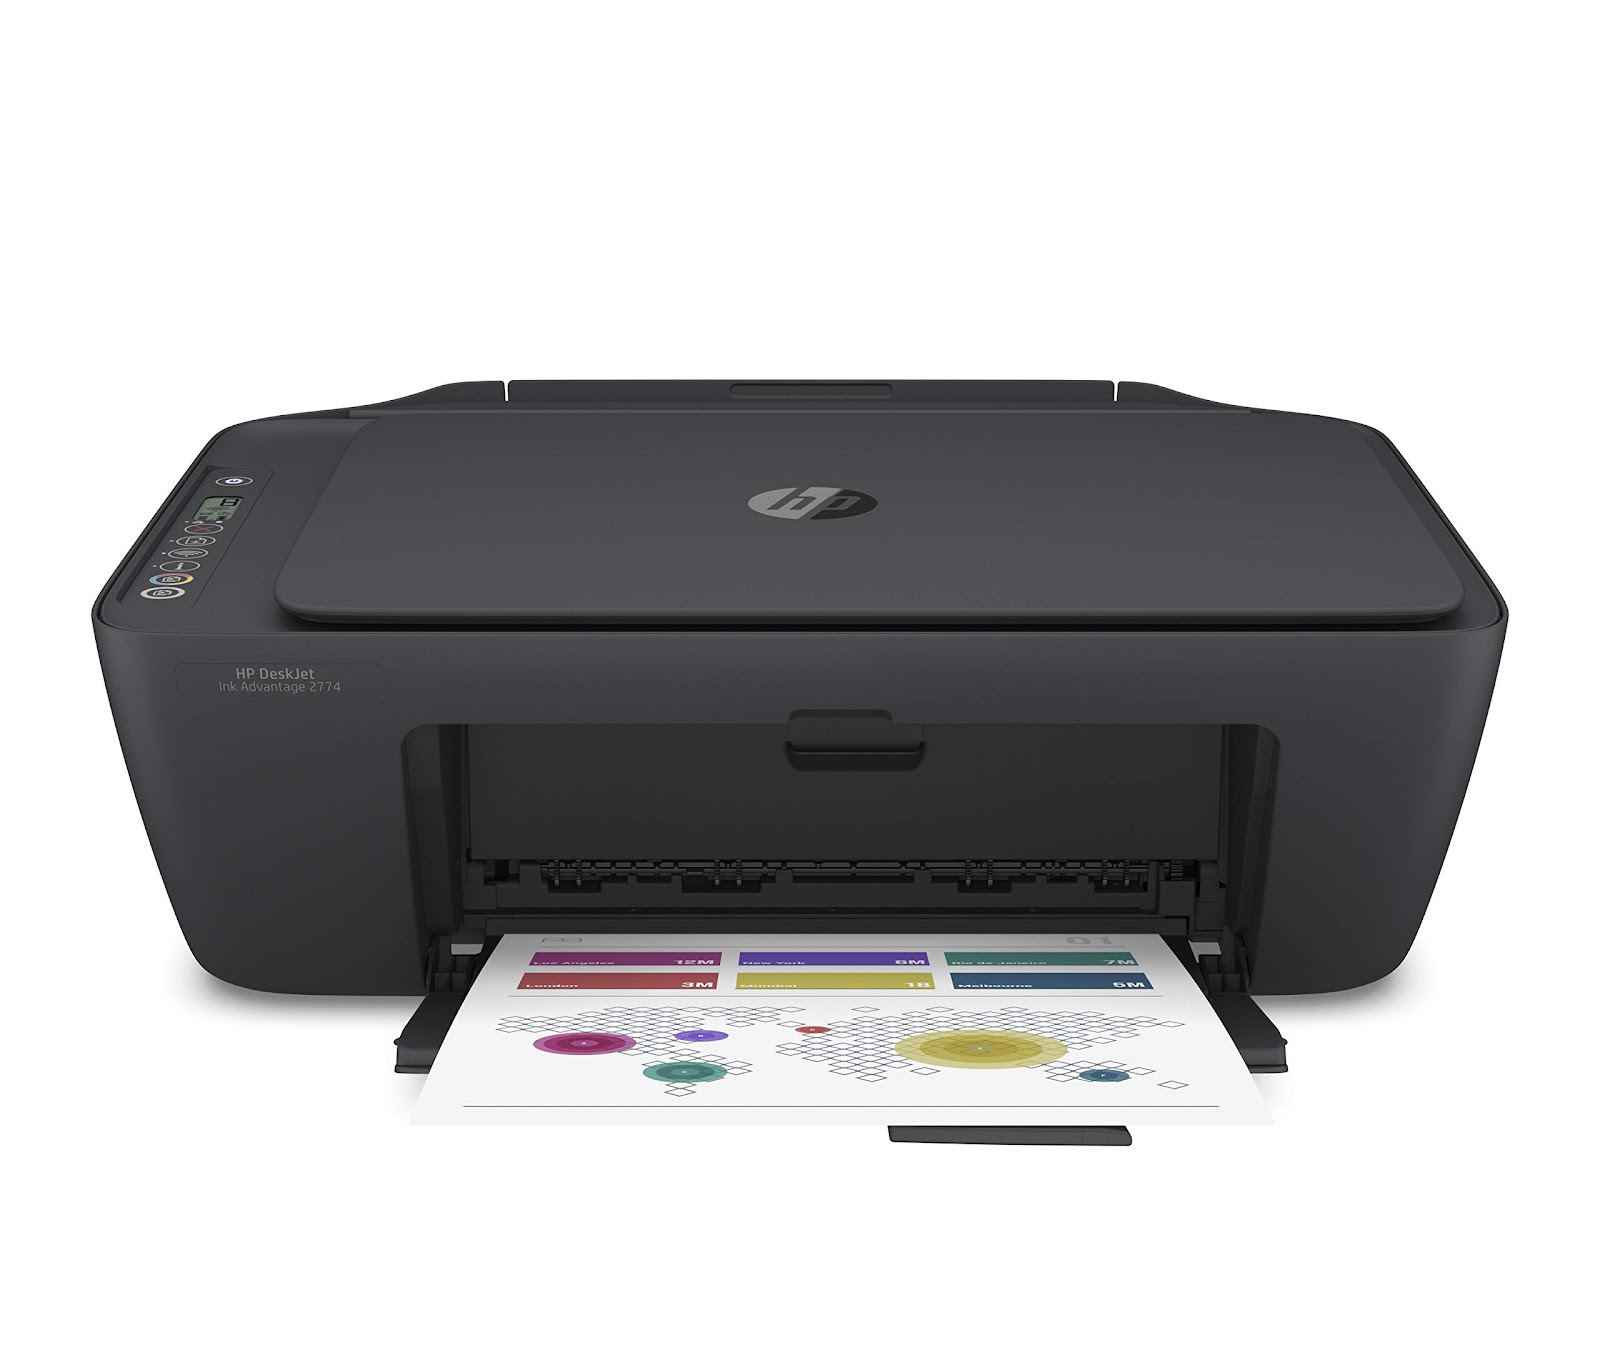 HP 2774 DeskJet Ink Advantage - Impressora Multifuncional, Wi-Fi, Scanner, Tecnologia de Impressão HP, Funções: Impressão, Cópia, Digitalização Impressora HP